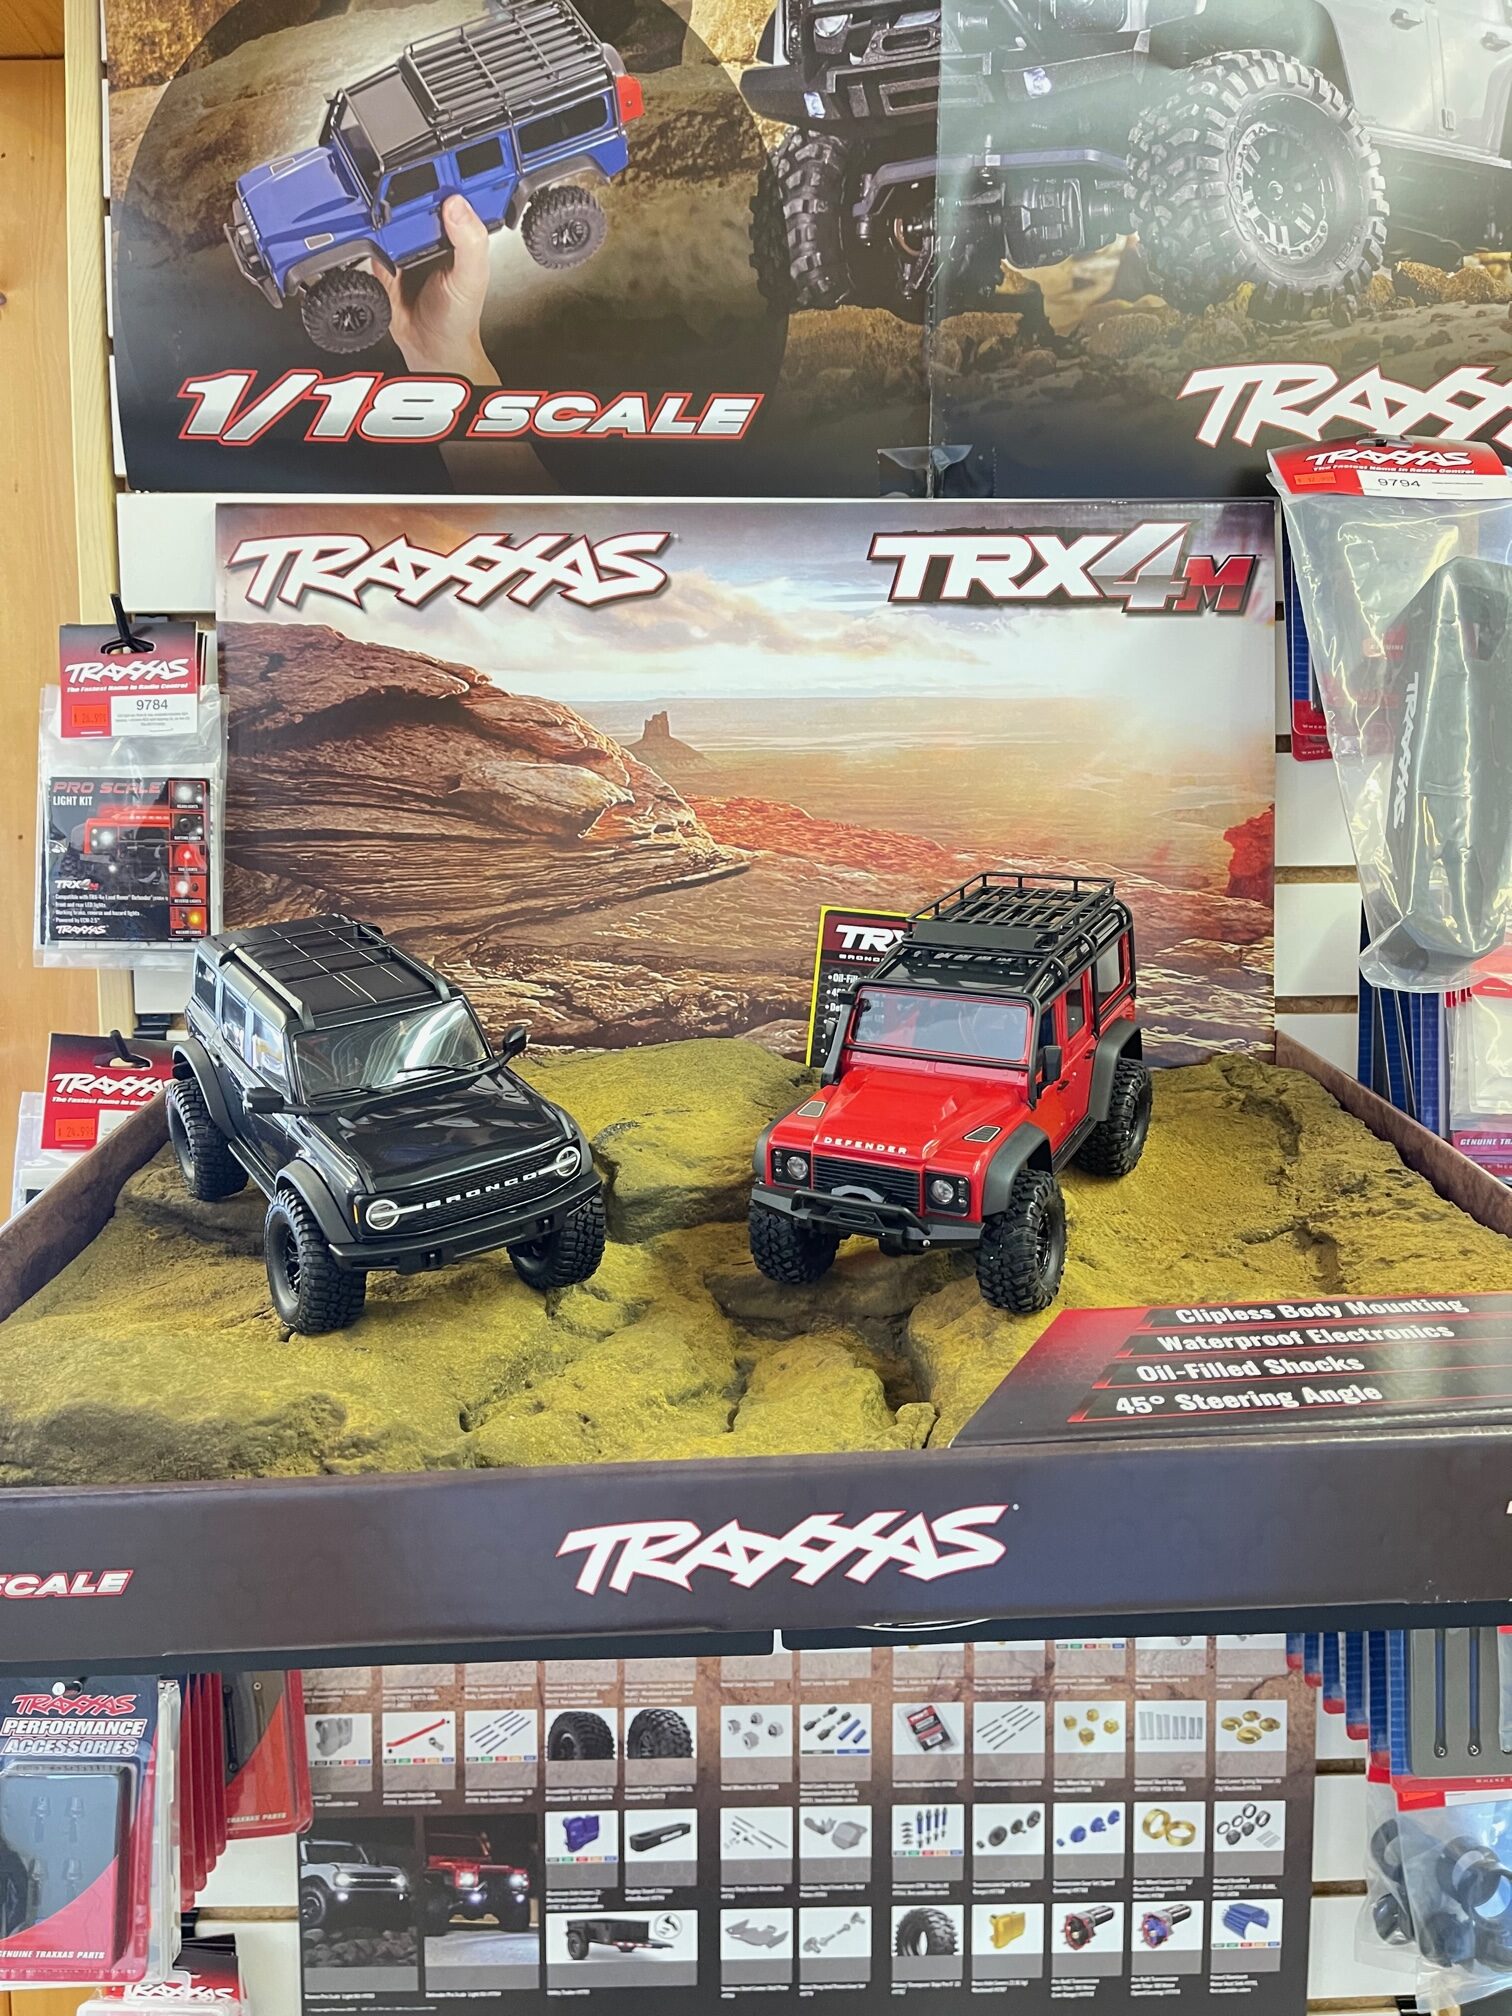 1/18 Ford Bronco TRX4M RTR Truck - Black — Adventure Hobbies & Toys